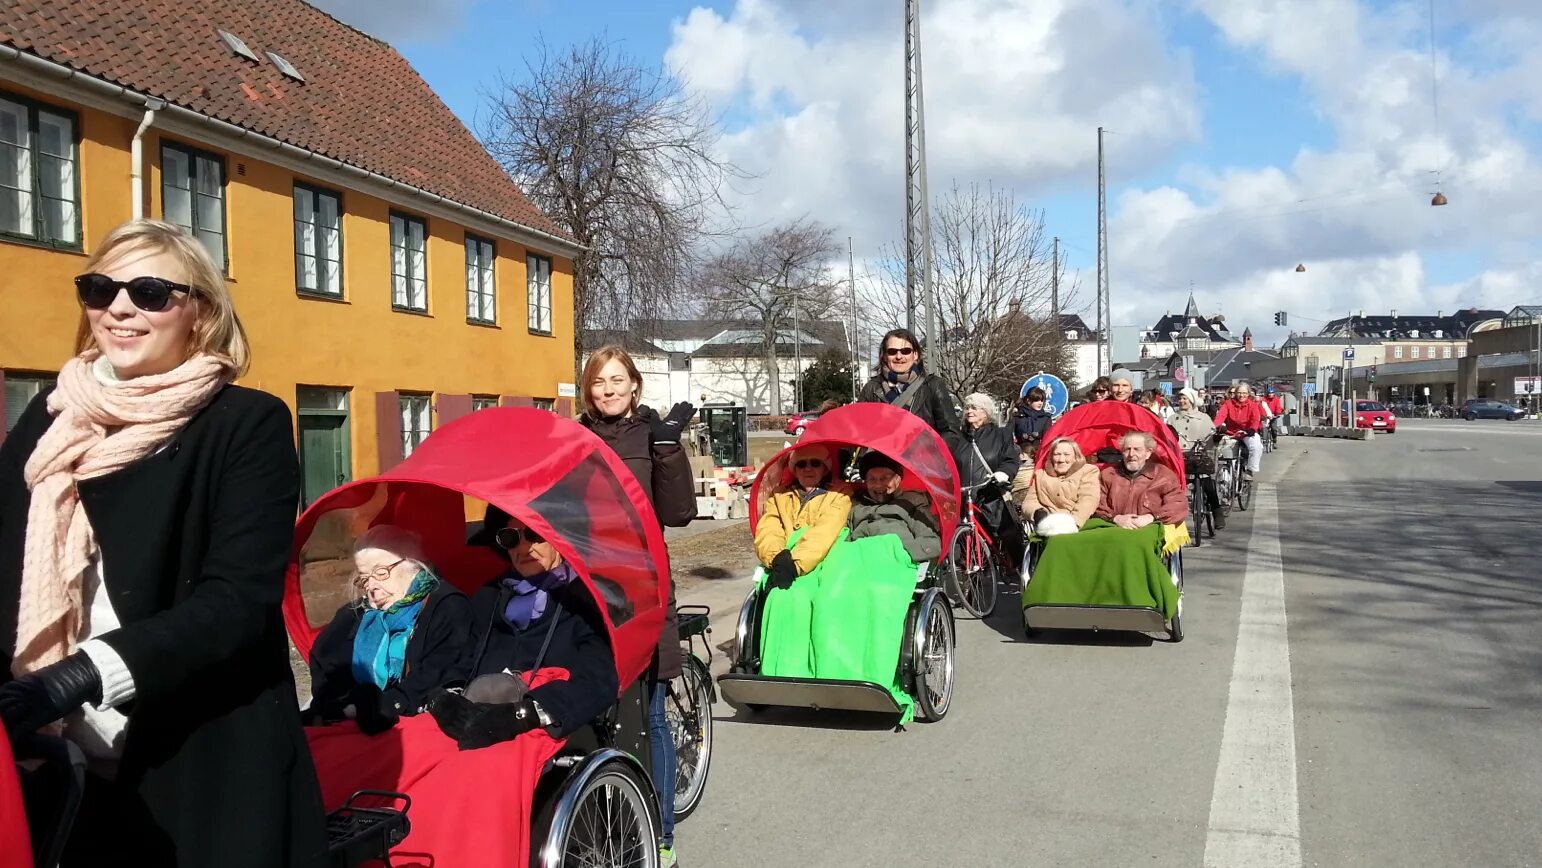 In Strollers Denmark. Denmark grows up. In Strollers Denmark jpeg. Denmark Culture. Without age